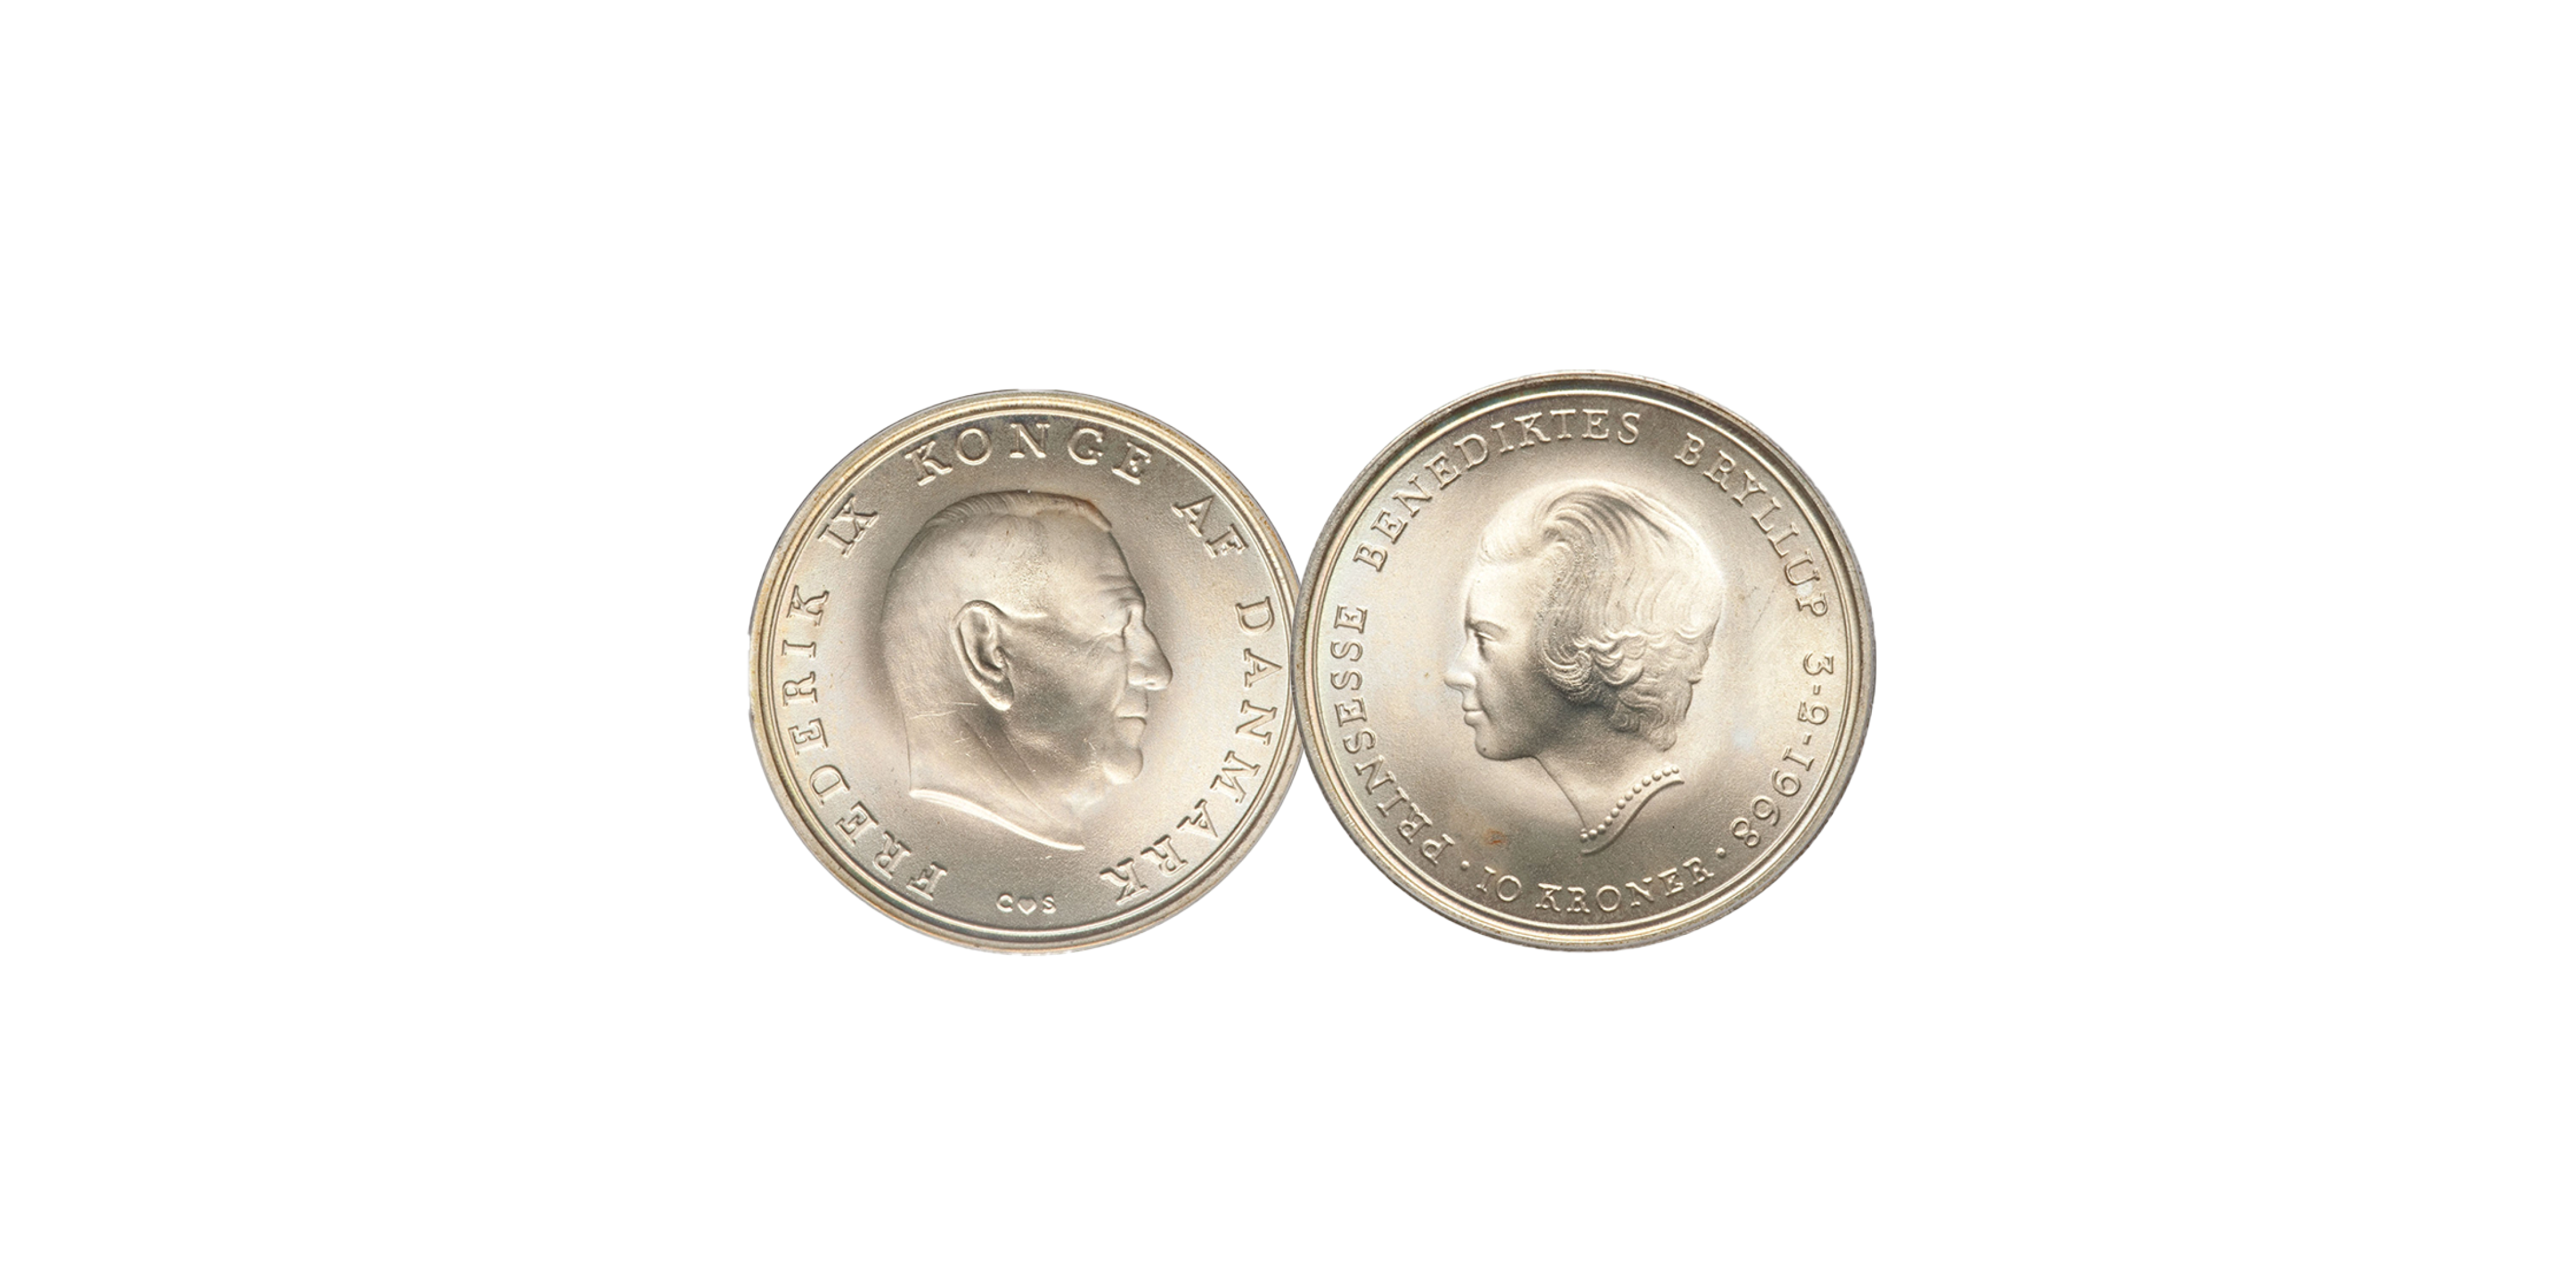 Flot erindringsmønt i 80% sølv fra Prinsesse Bendiktes bryllup den 3. februar 1968.